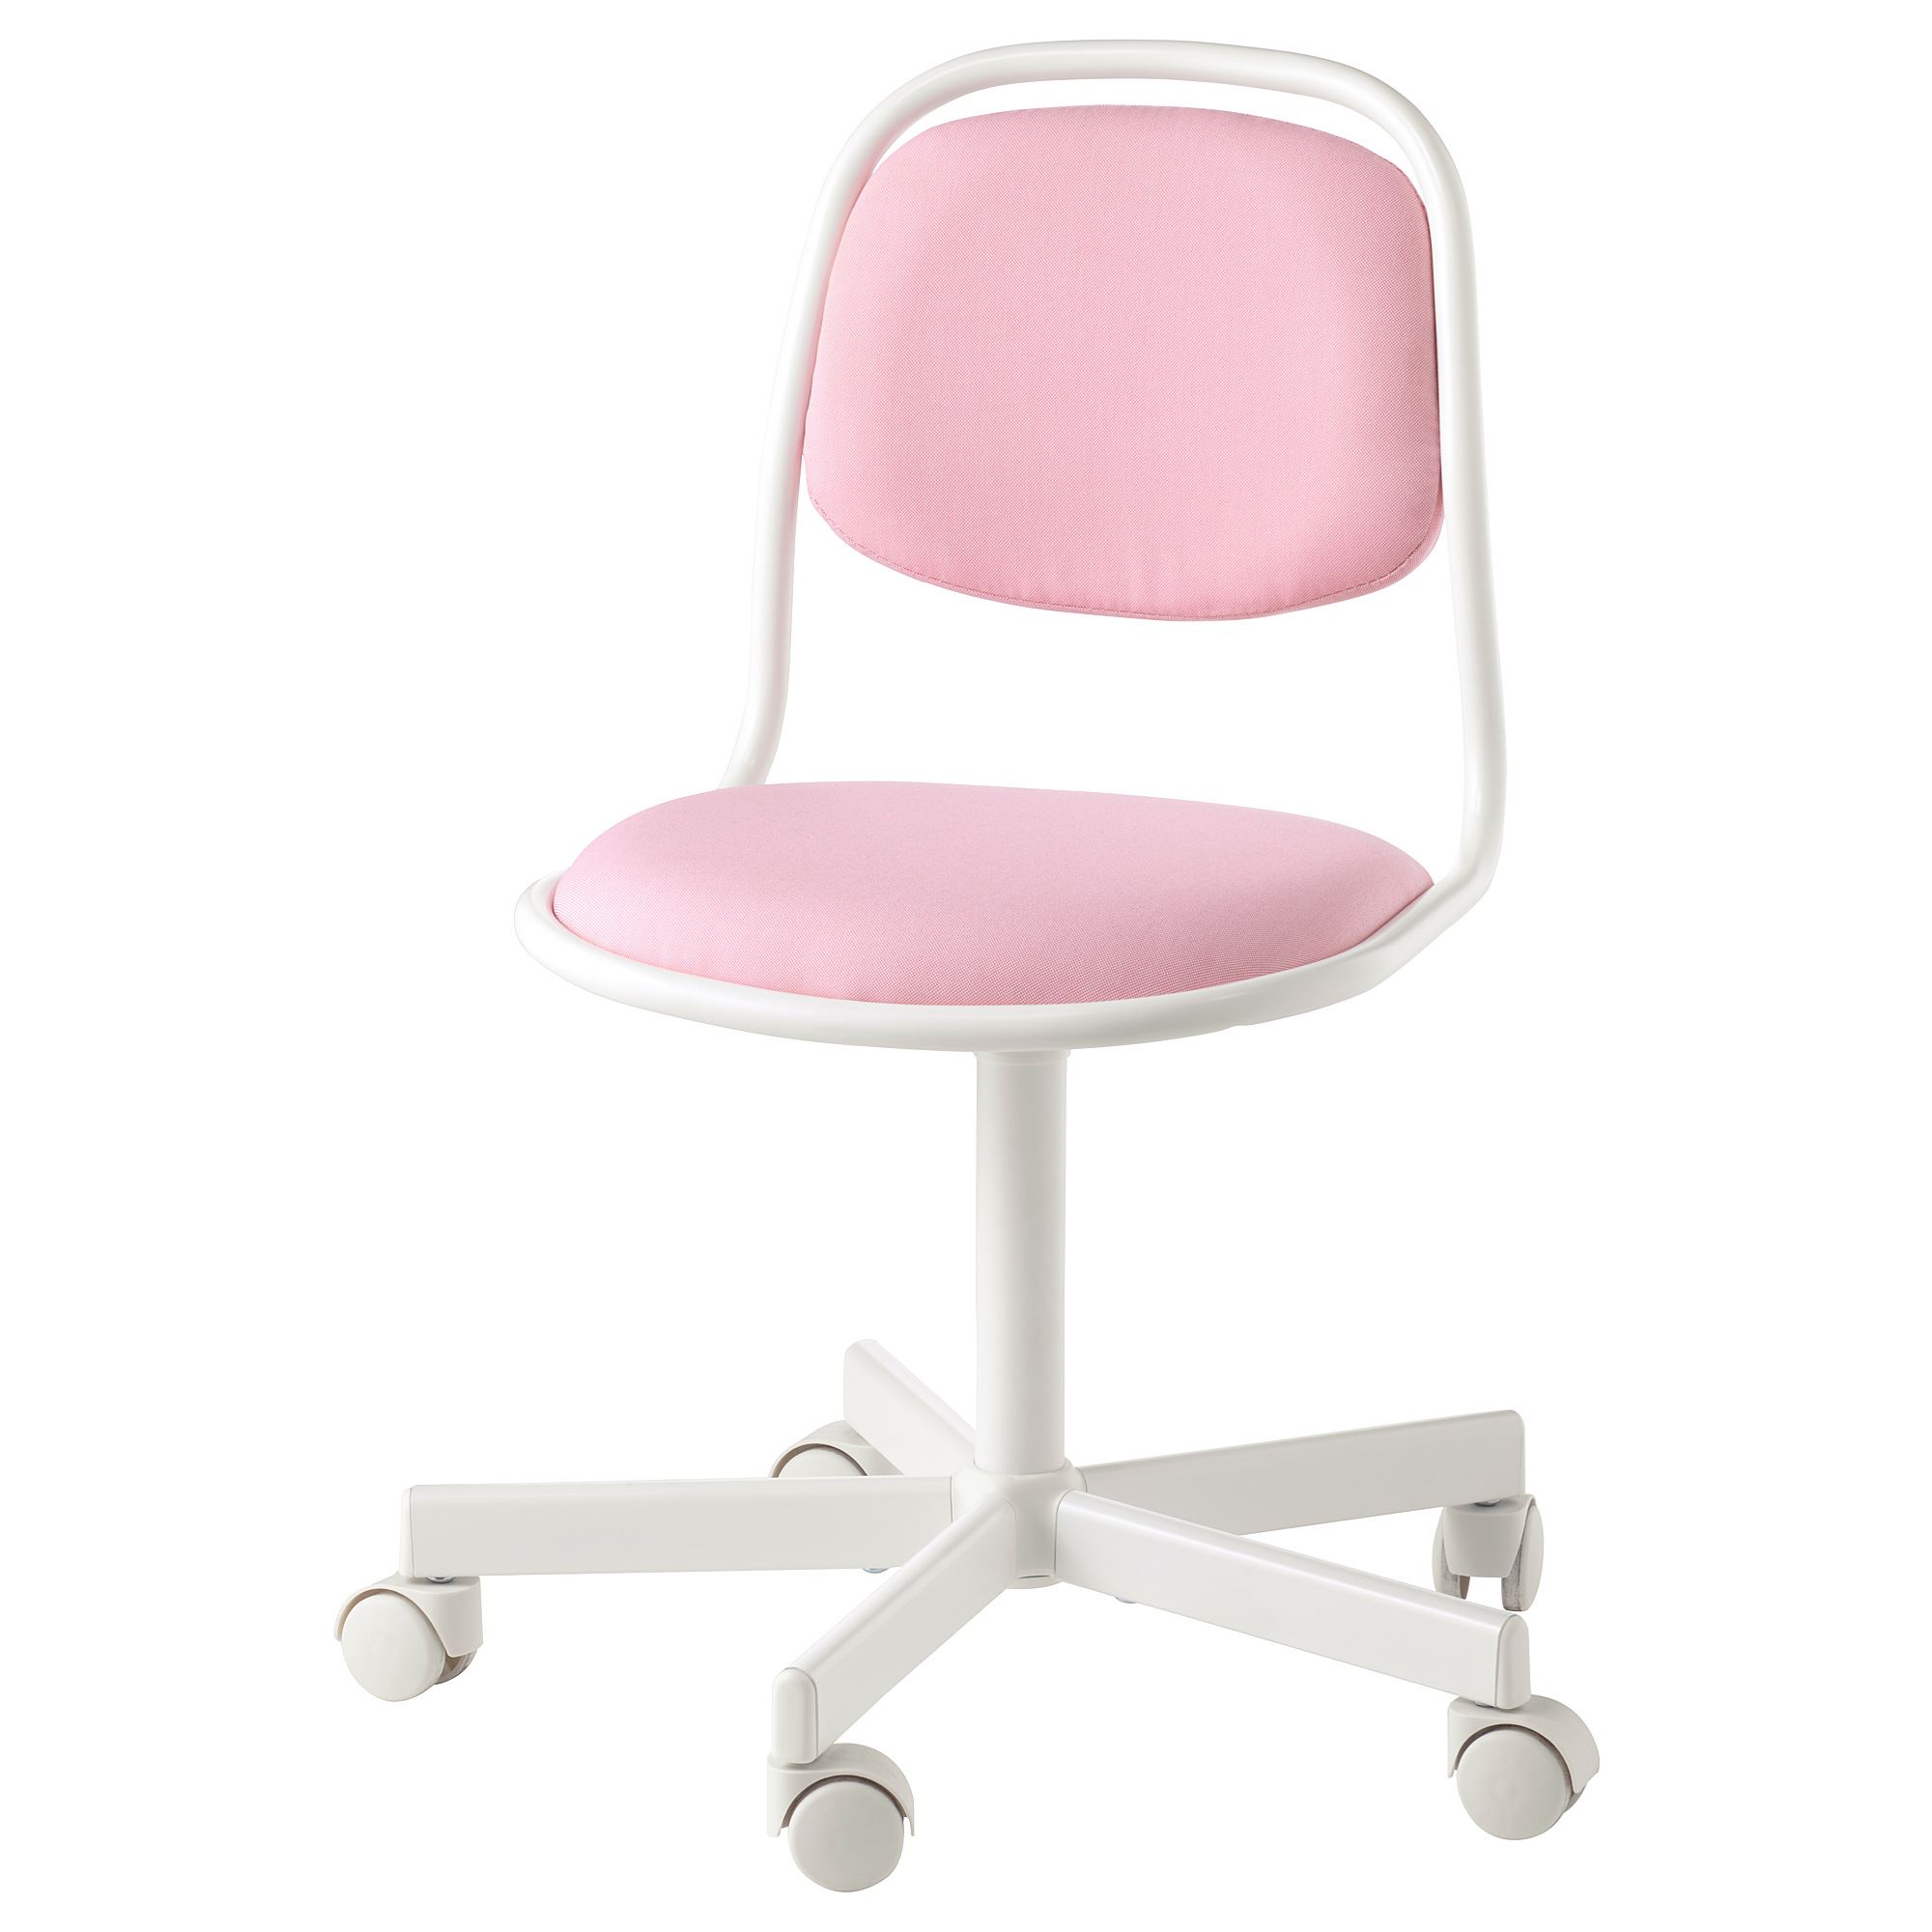 orfjall cocuk sandalyesi beyaz vissle pembe